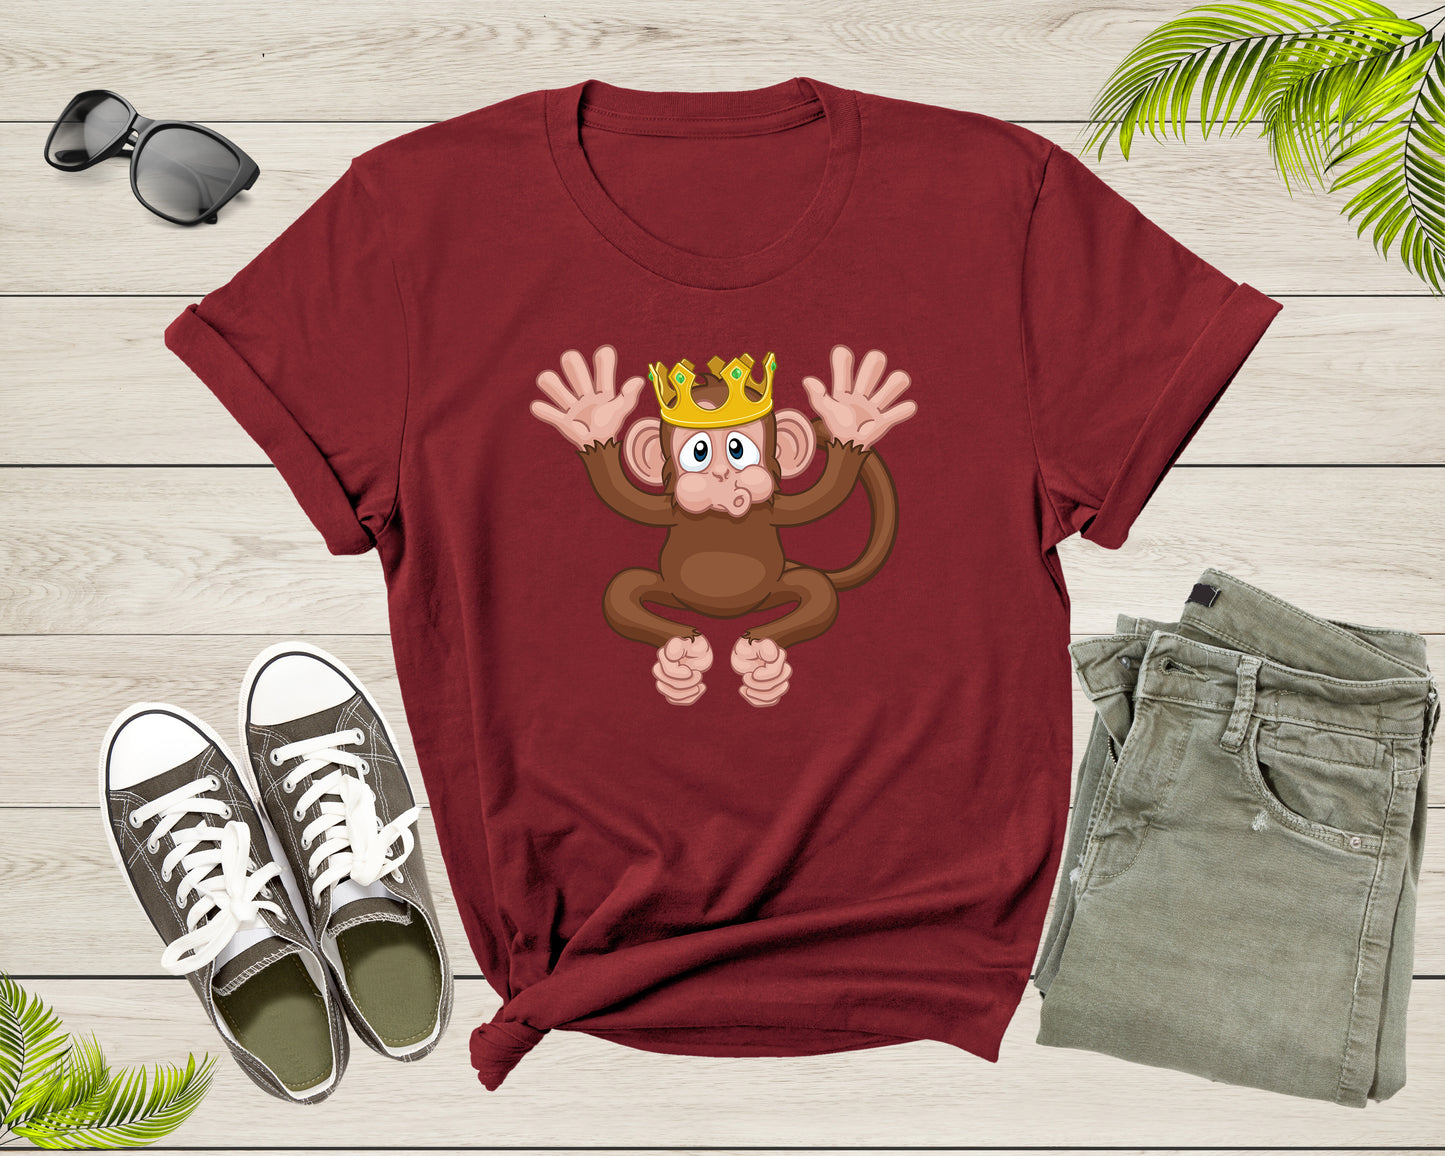 Fun Monkey Wearing King Crown Cute Animal Cartoon Character T-Shirt Monkey Lover Gift T Shirt for Men Women Kids Boys Girls Graphic Tshirt